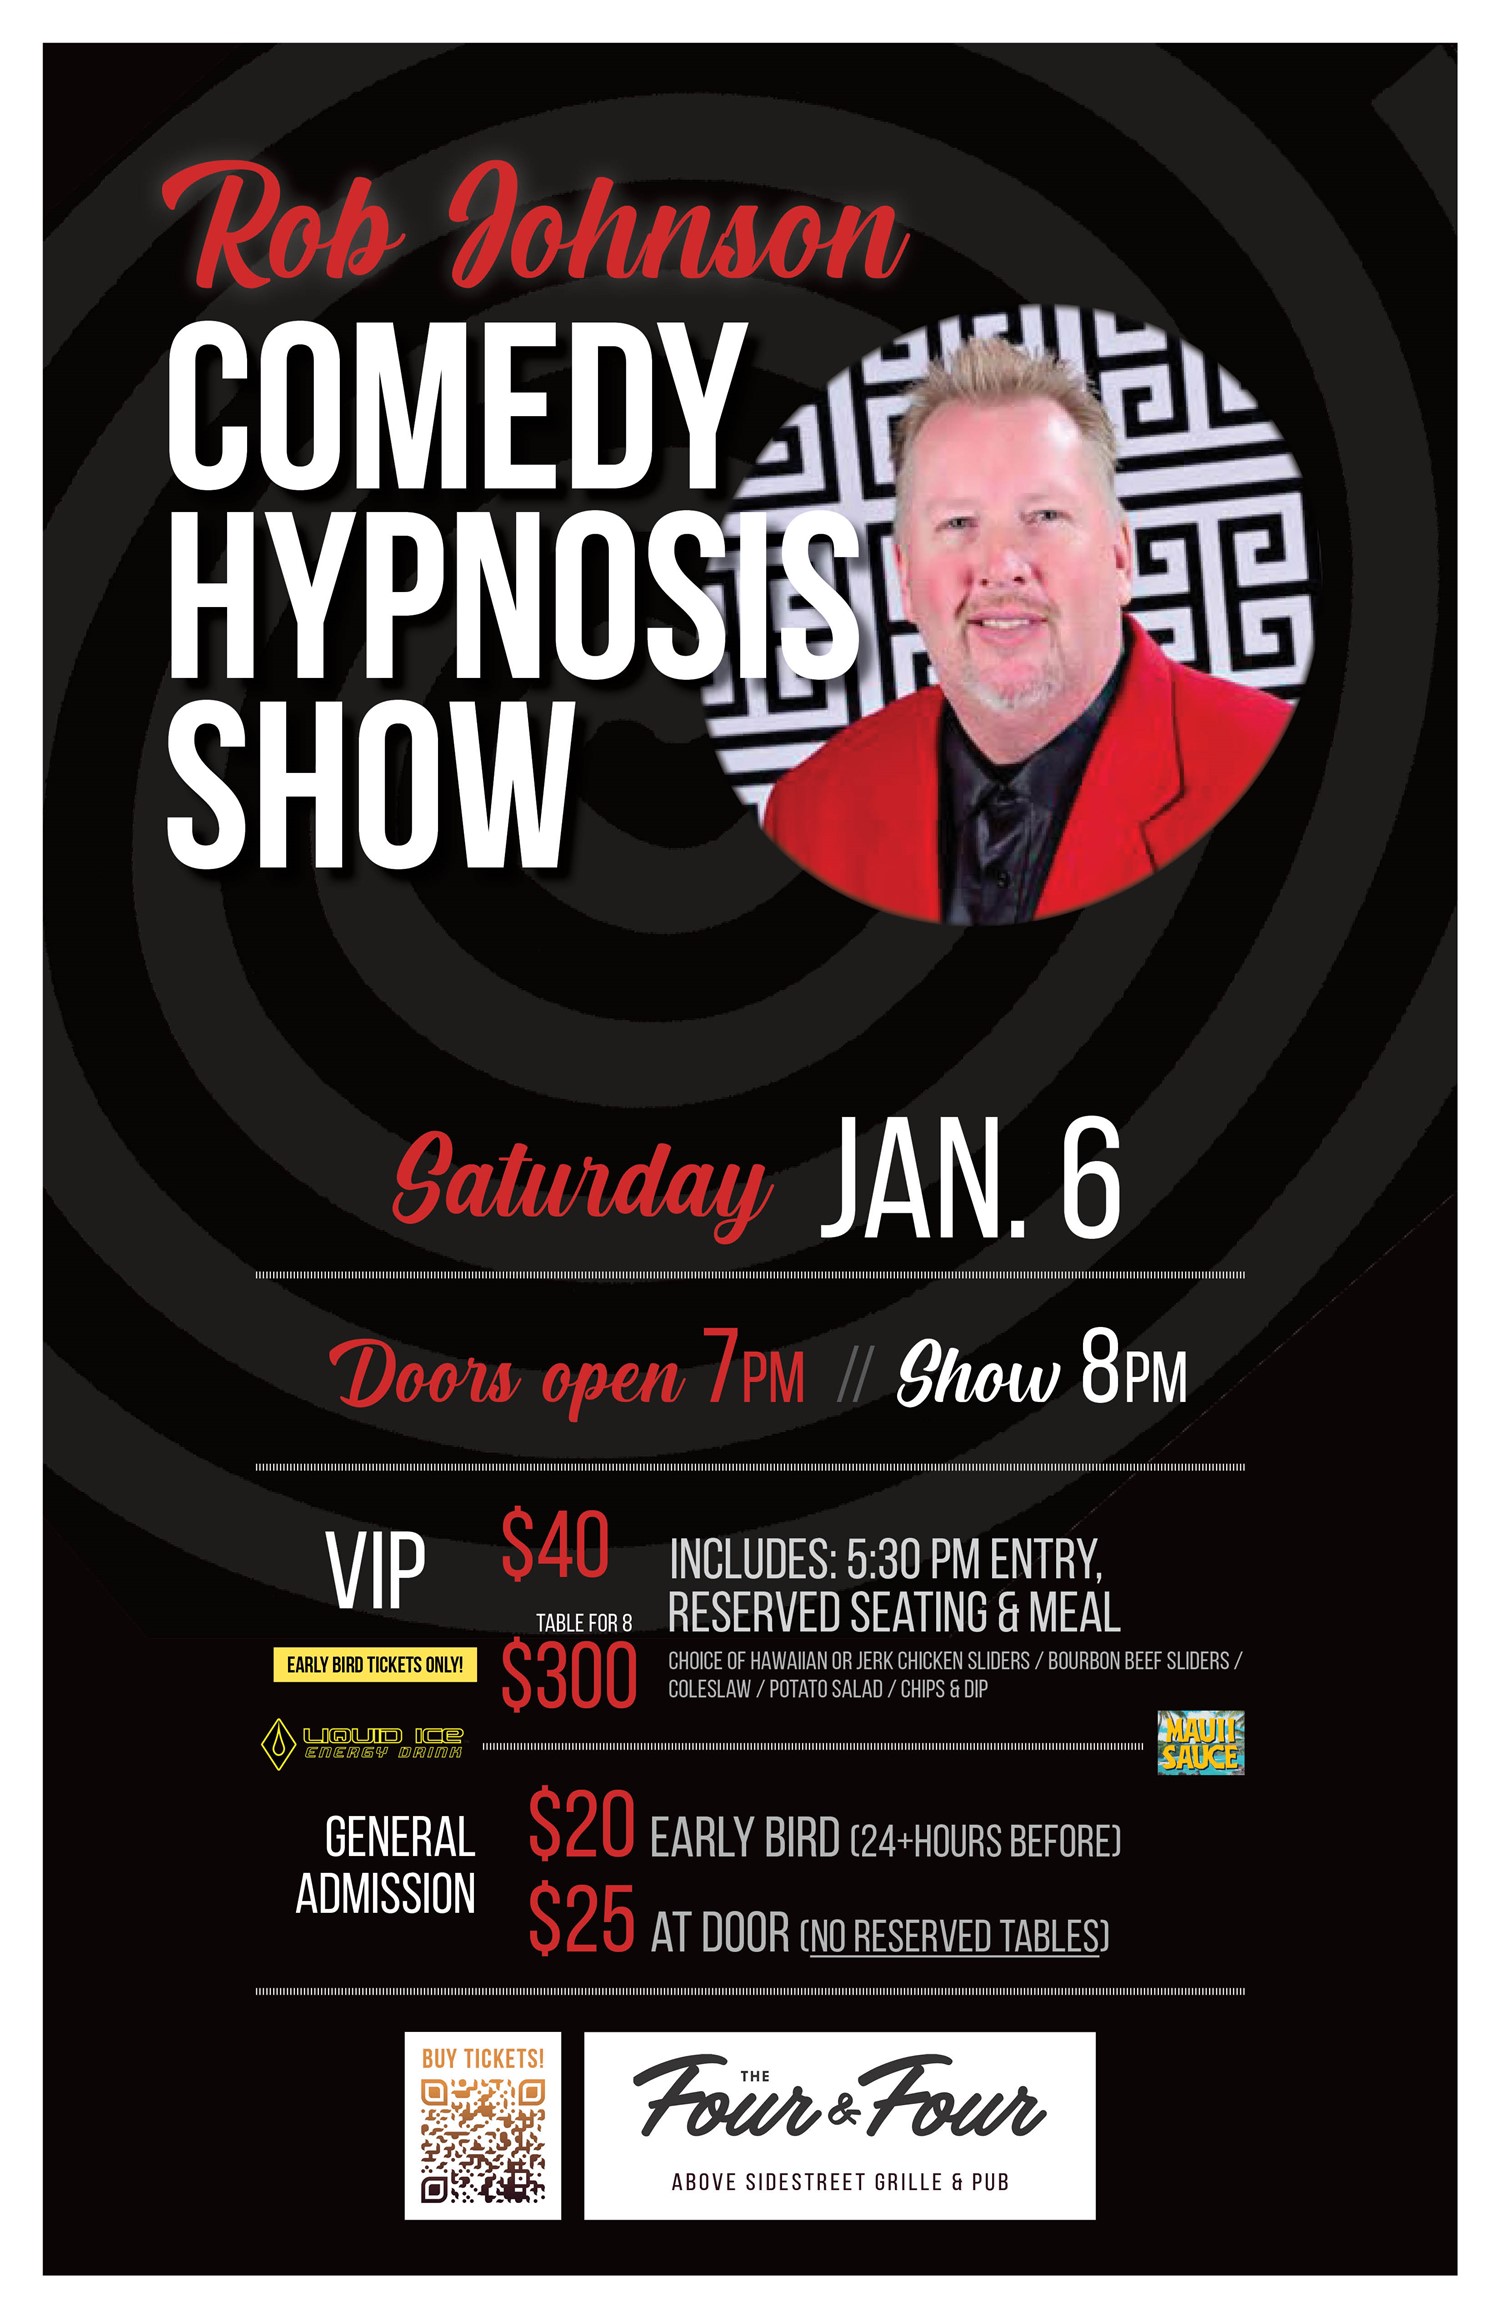 Rob Johnson Comedy Hypnosis Show  on janv. 06, 20:00@The Four and Four, above Sidestreet Grille & Bar - Achetez des billets et obtenez des informations surSidestreet Live / Four and Four 